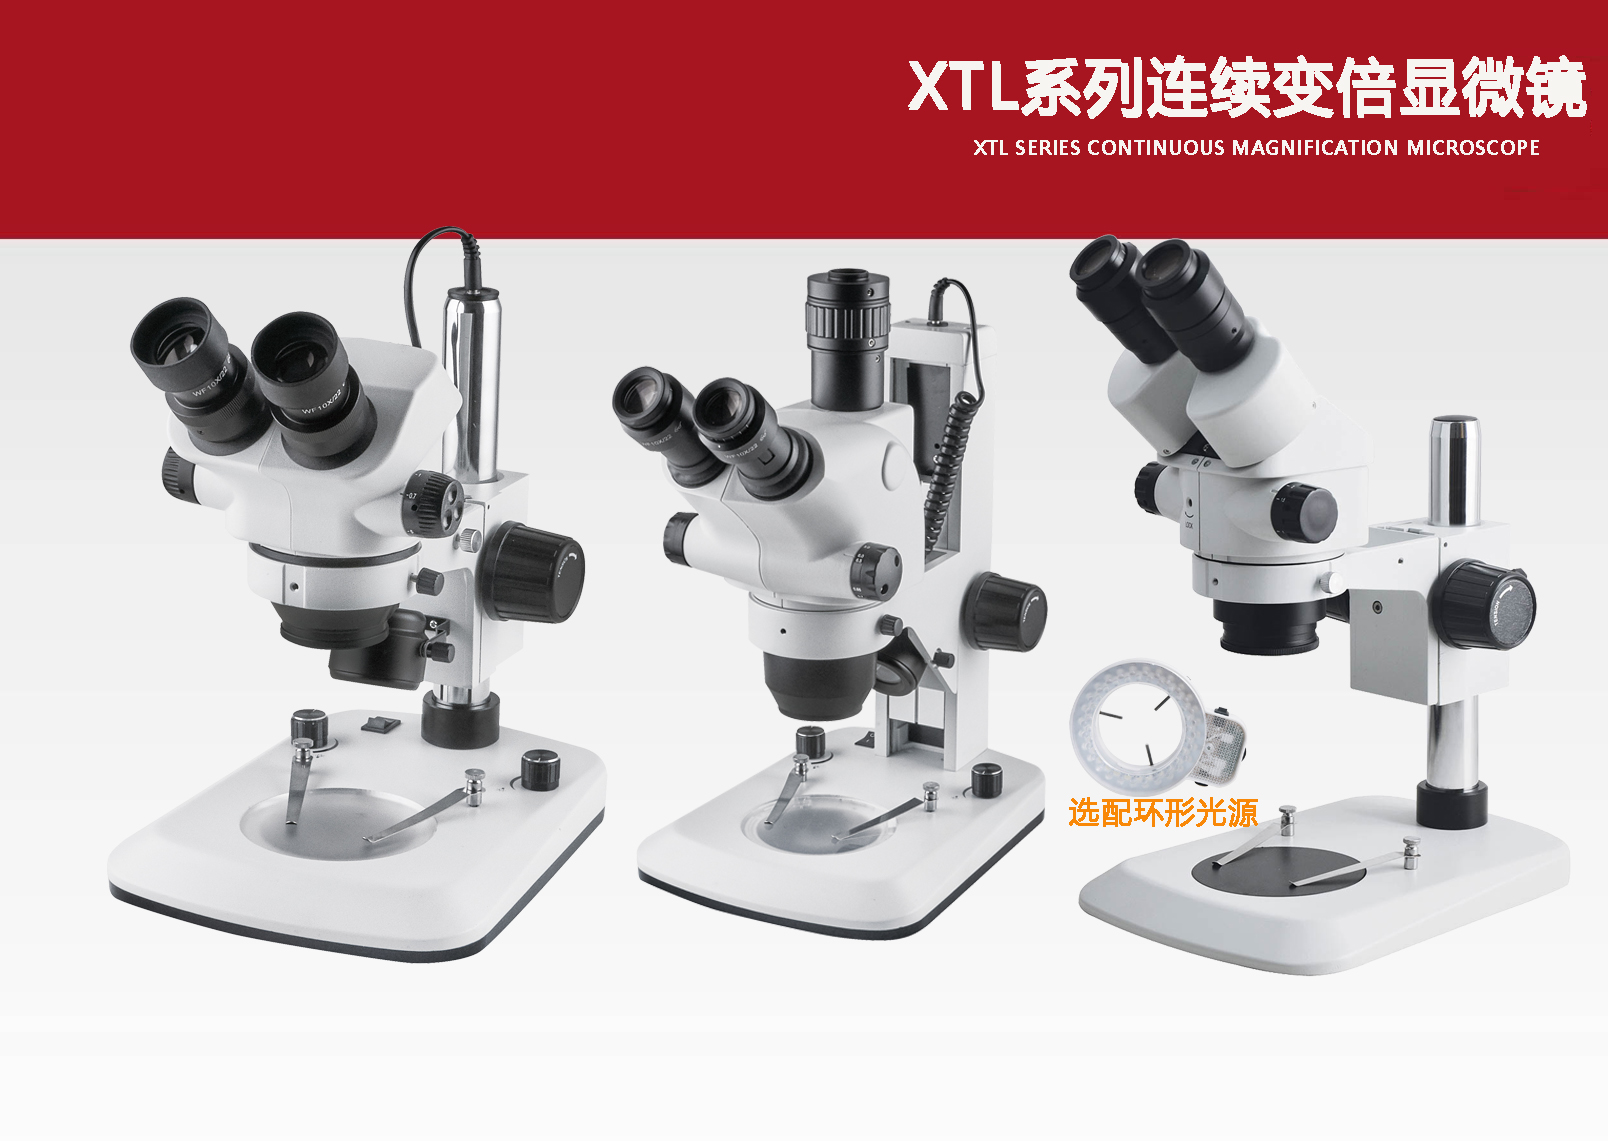 XTL-0750变倍显微镜.jpg